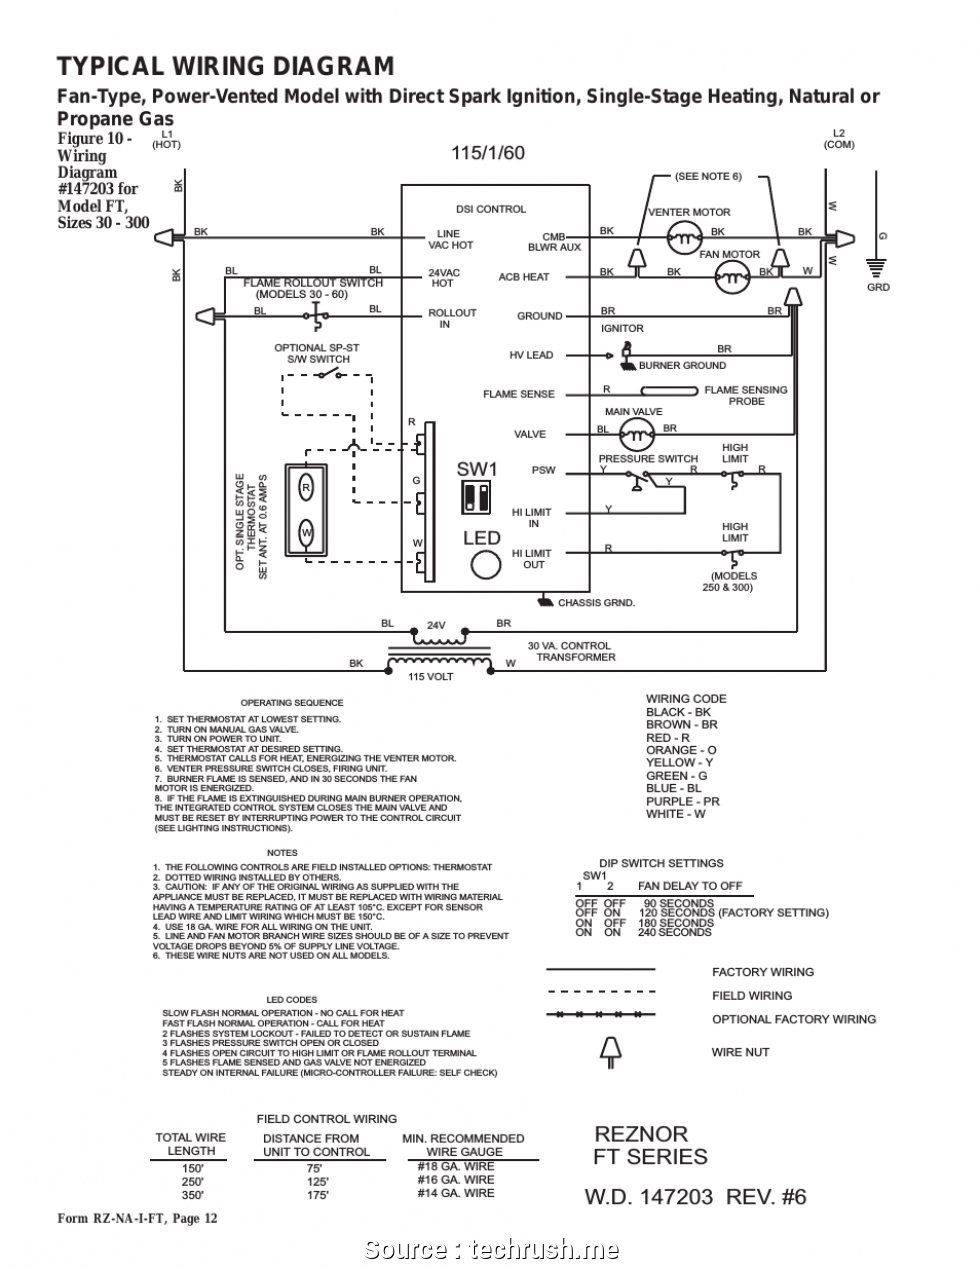 Reznor Waste Oil Furnace Thermostat Wiring | Wiring Diagram - Reznor Heater Wiring Diagram